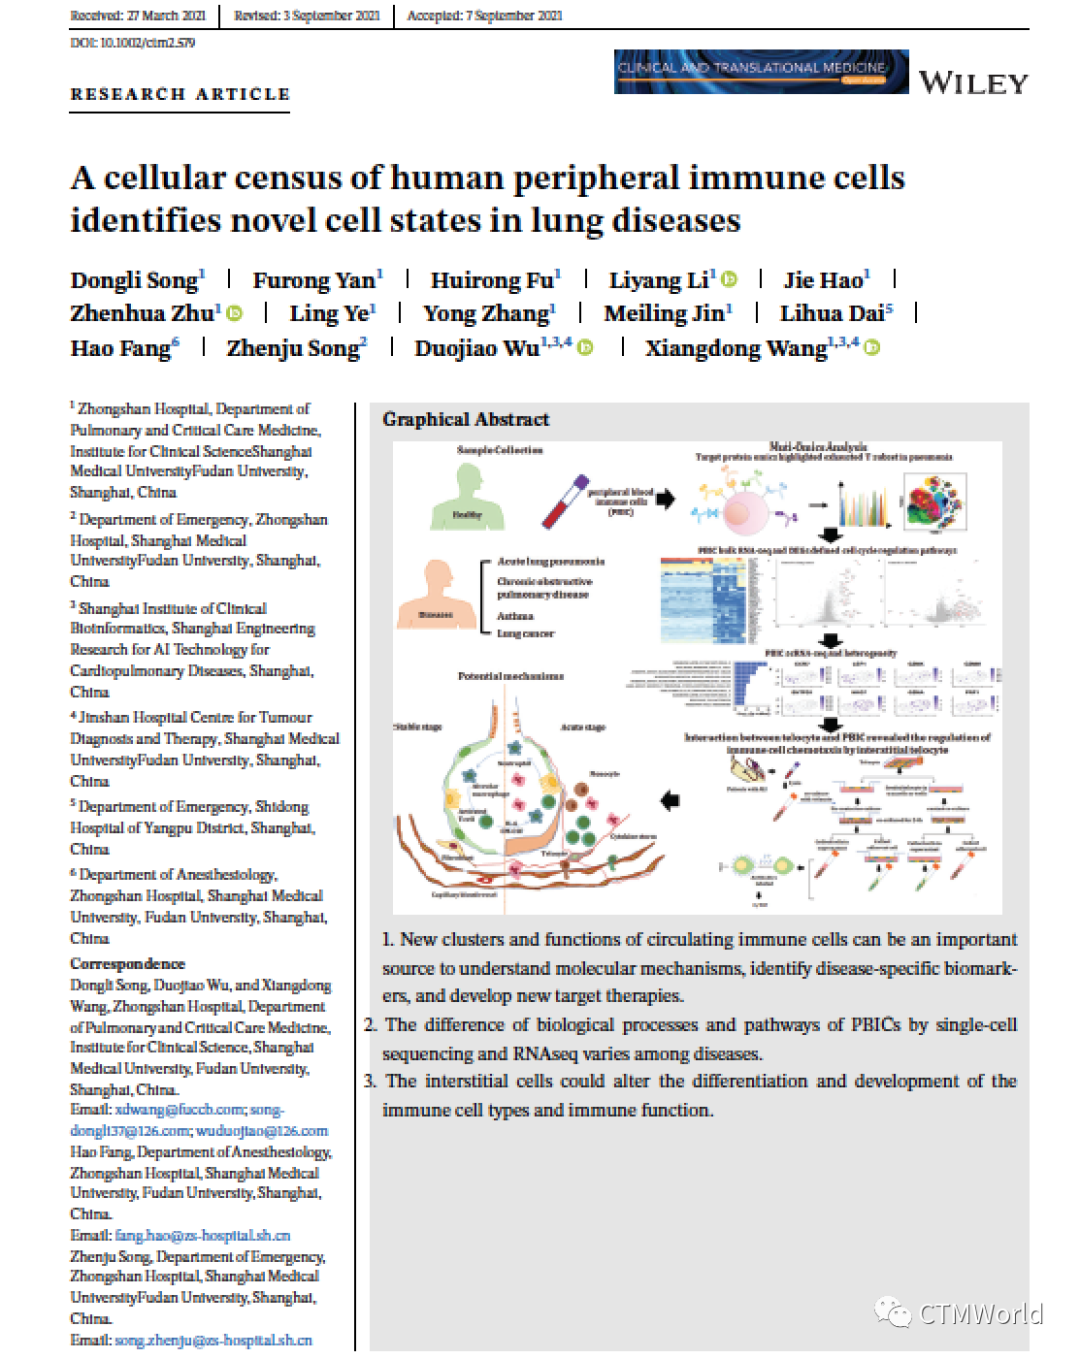 CTM期刊 |在人肺疾病患者的外周免疫细胞中发现了新的免疫细胞状态